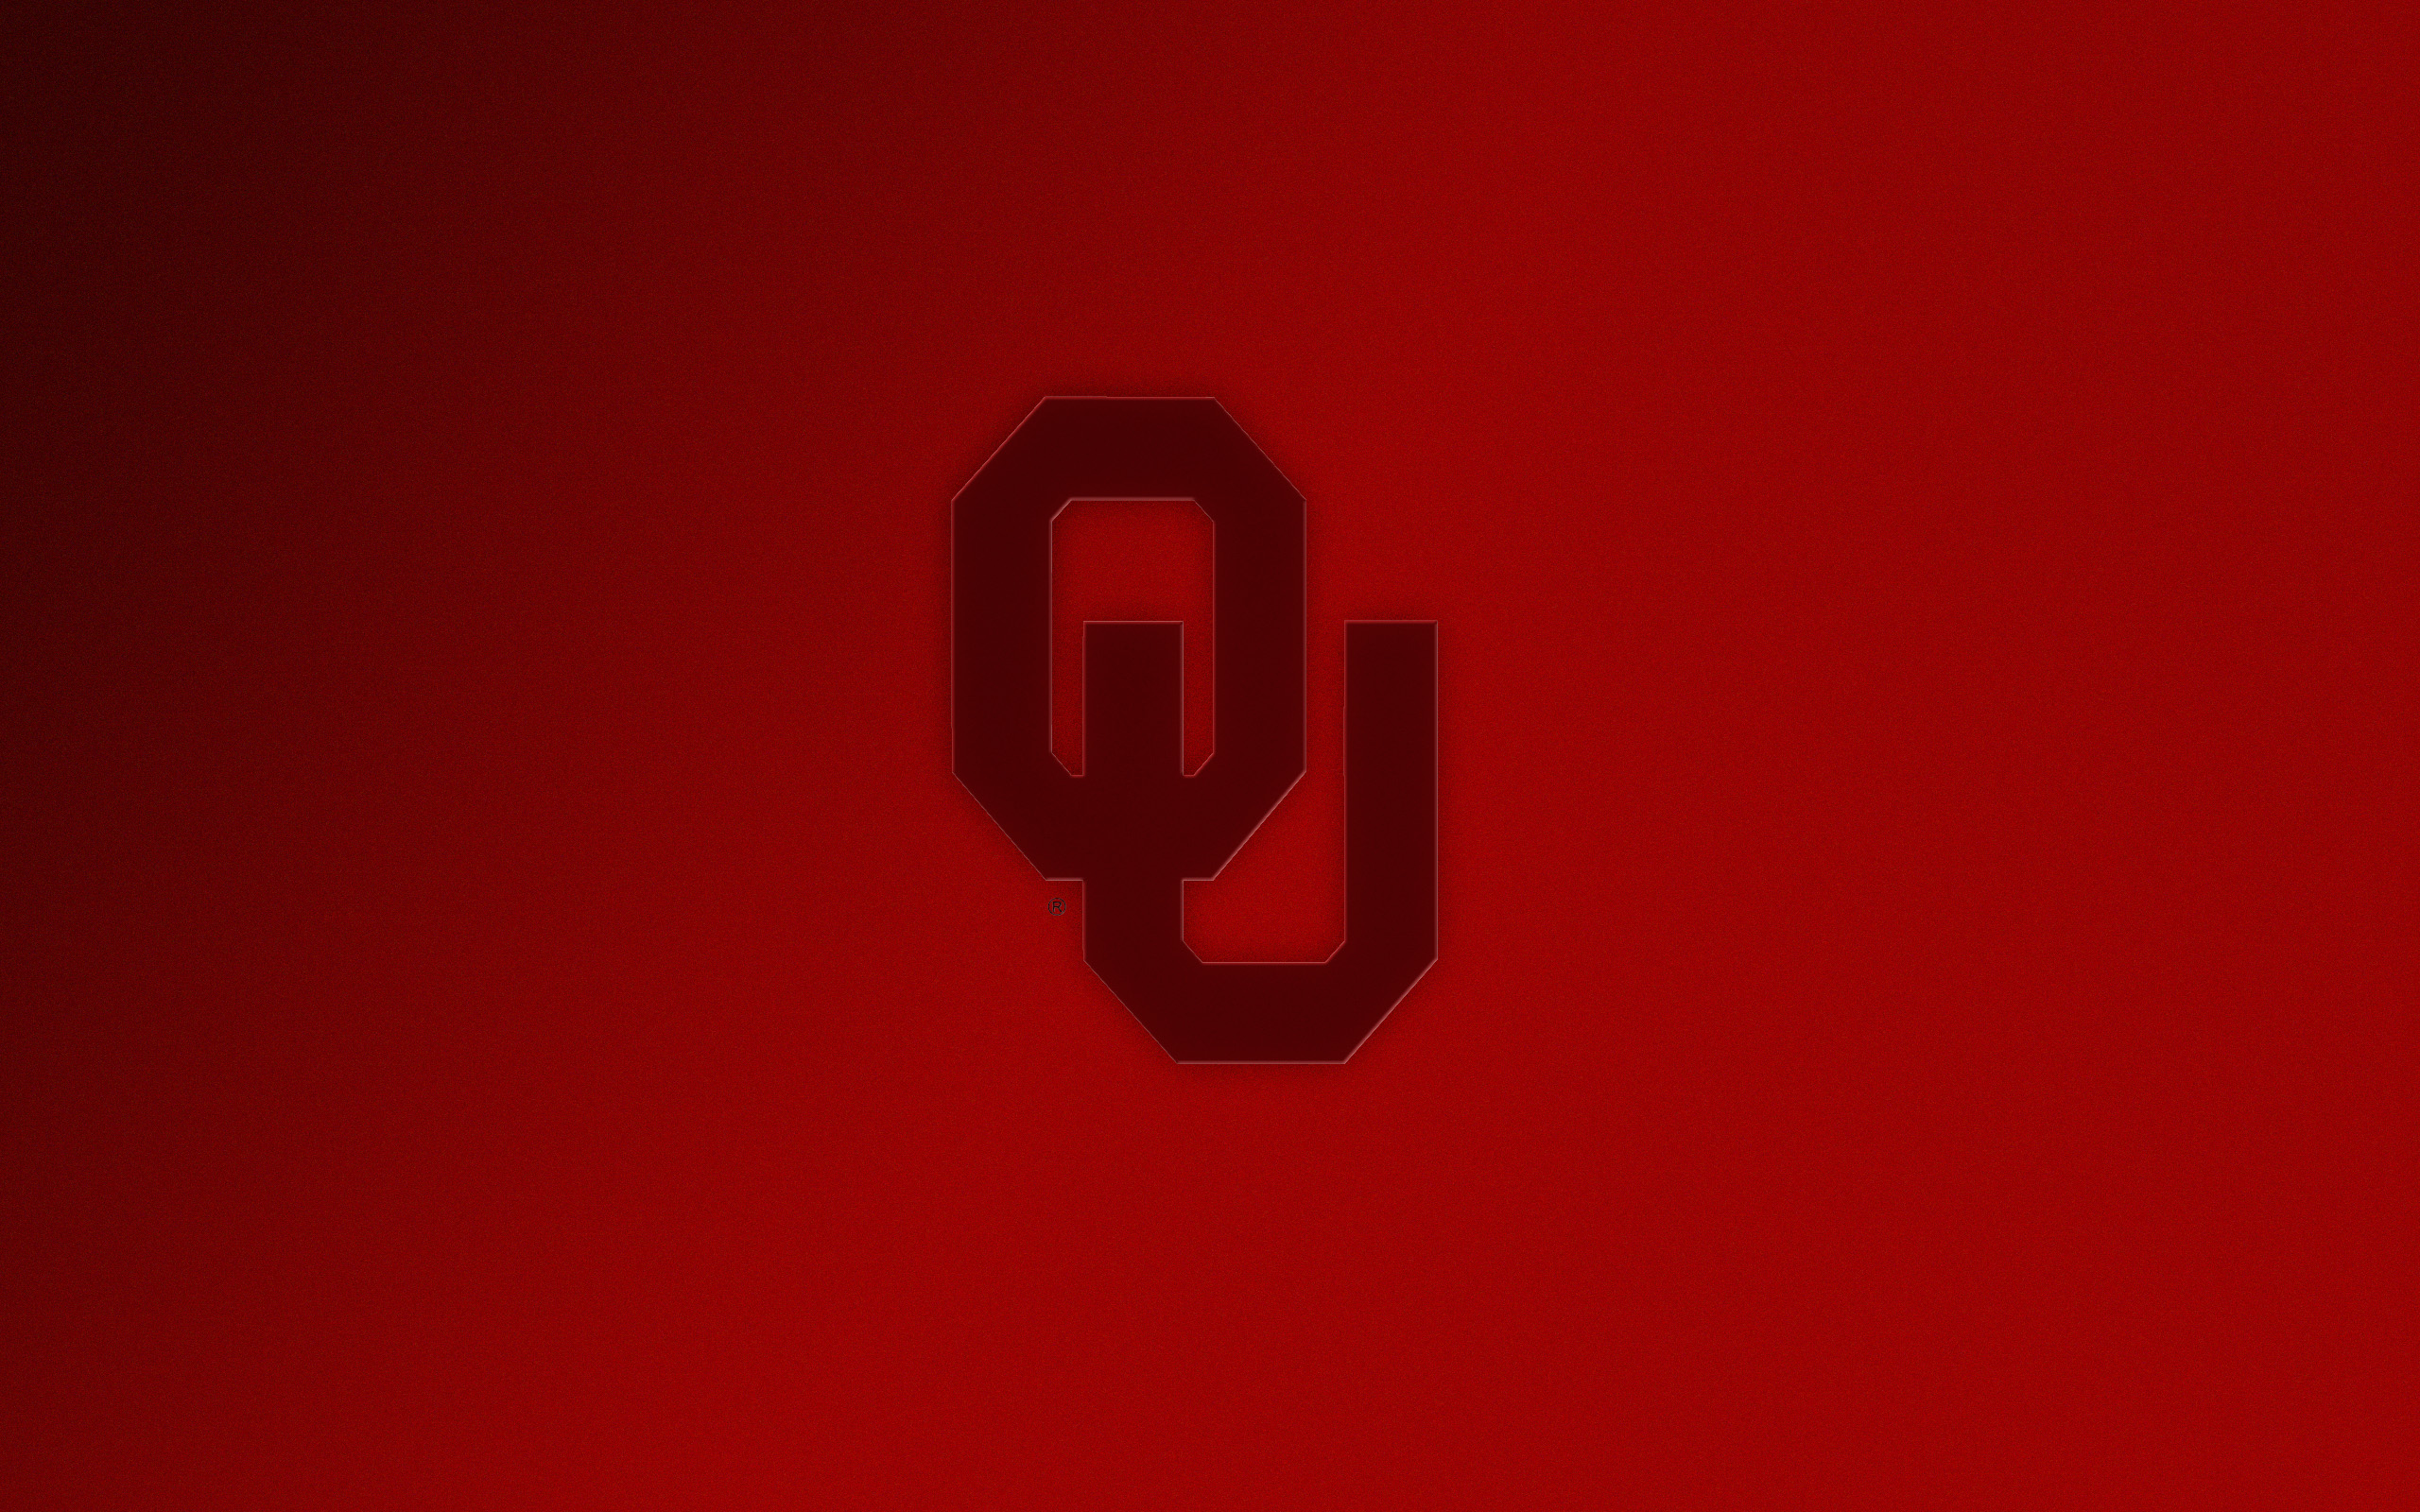 Ounation University Of Oklahoma Themed Wallpaper